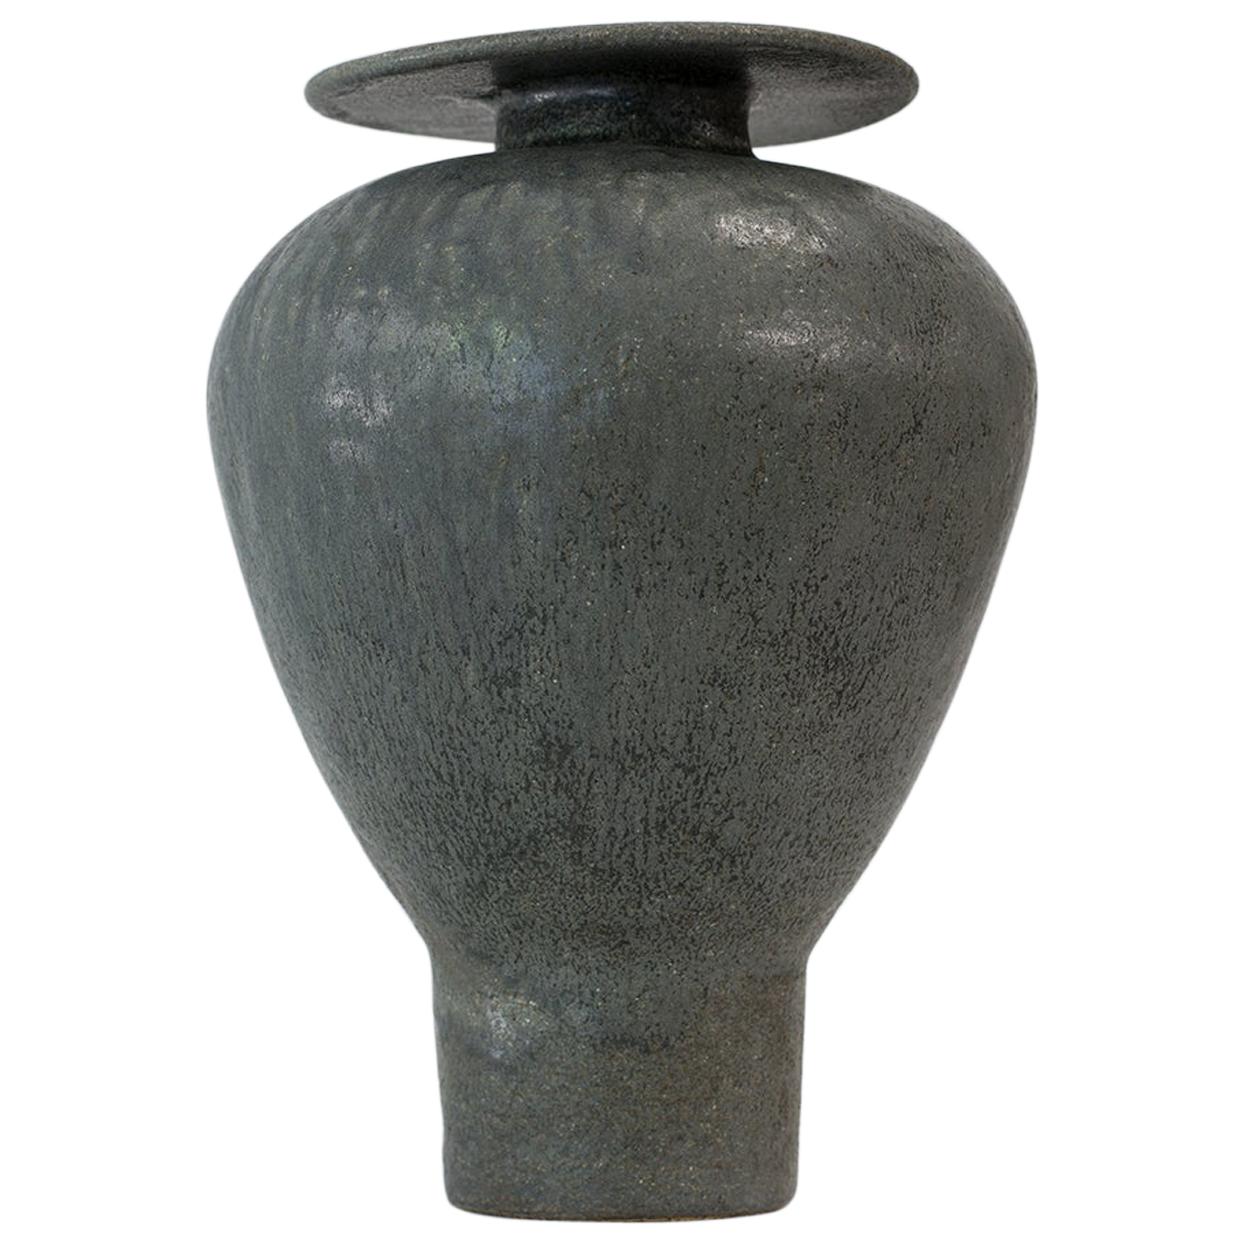 Greeny Black "Isolated" Glaze Stoneware Vase, Raquel Vidal and Pedro Paz